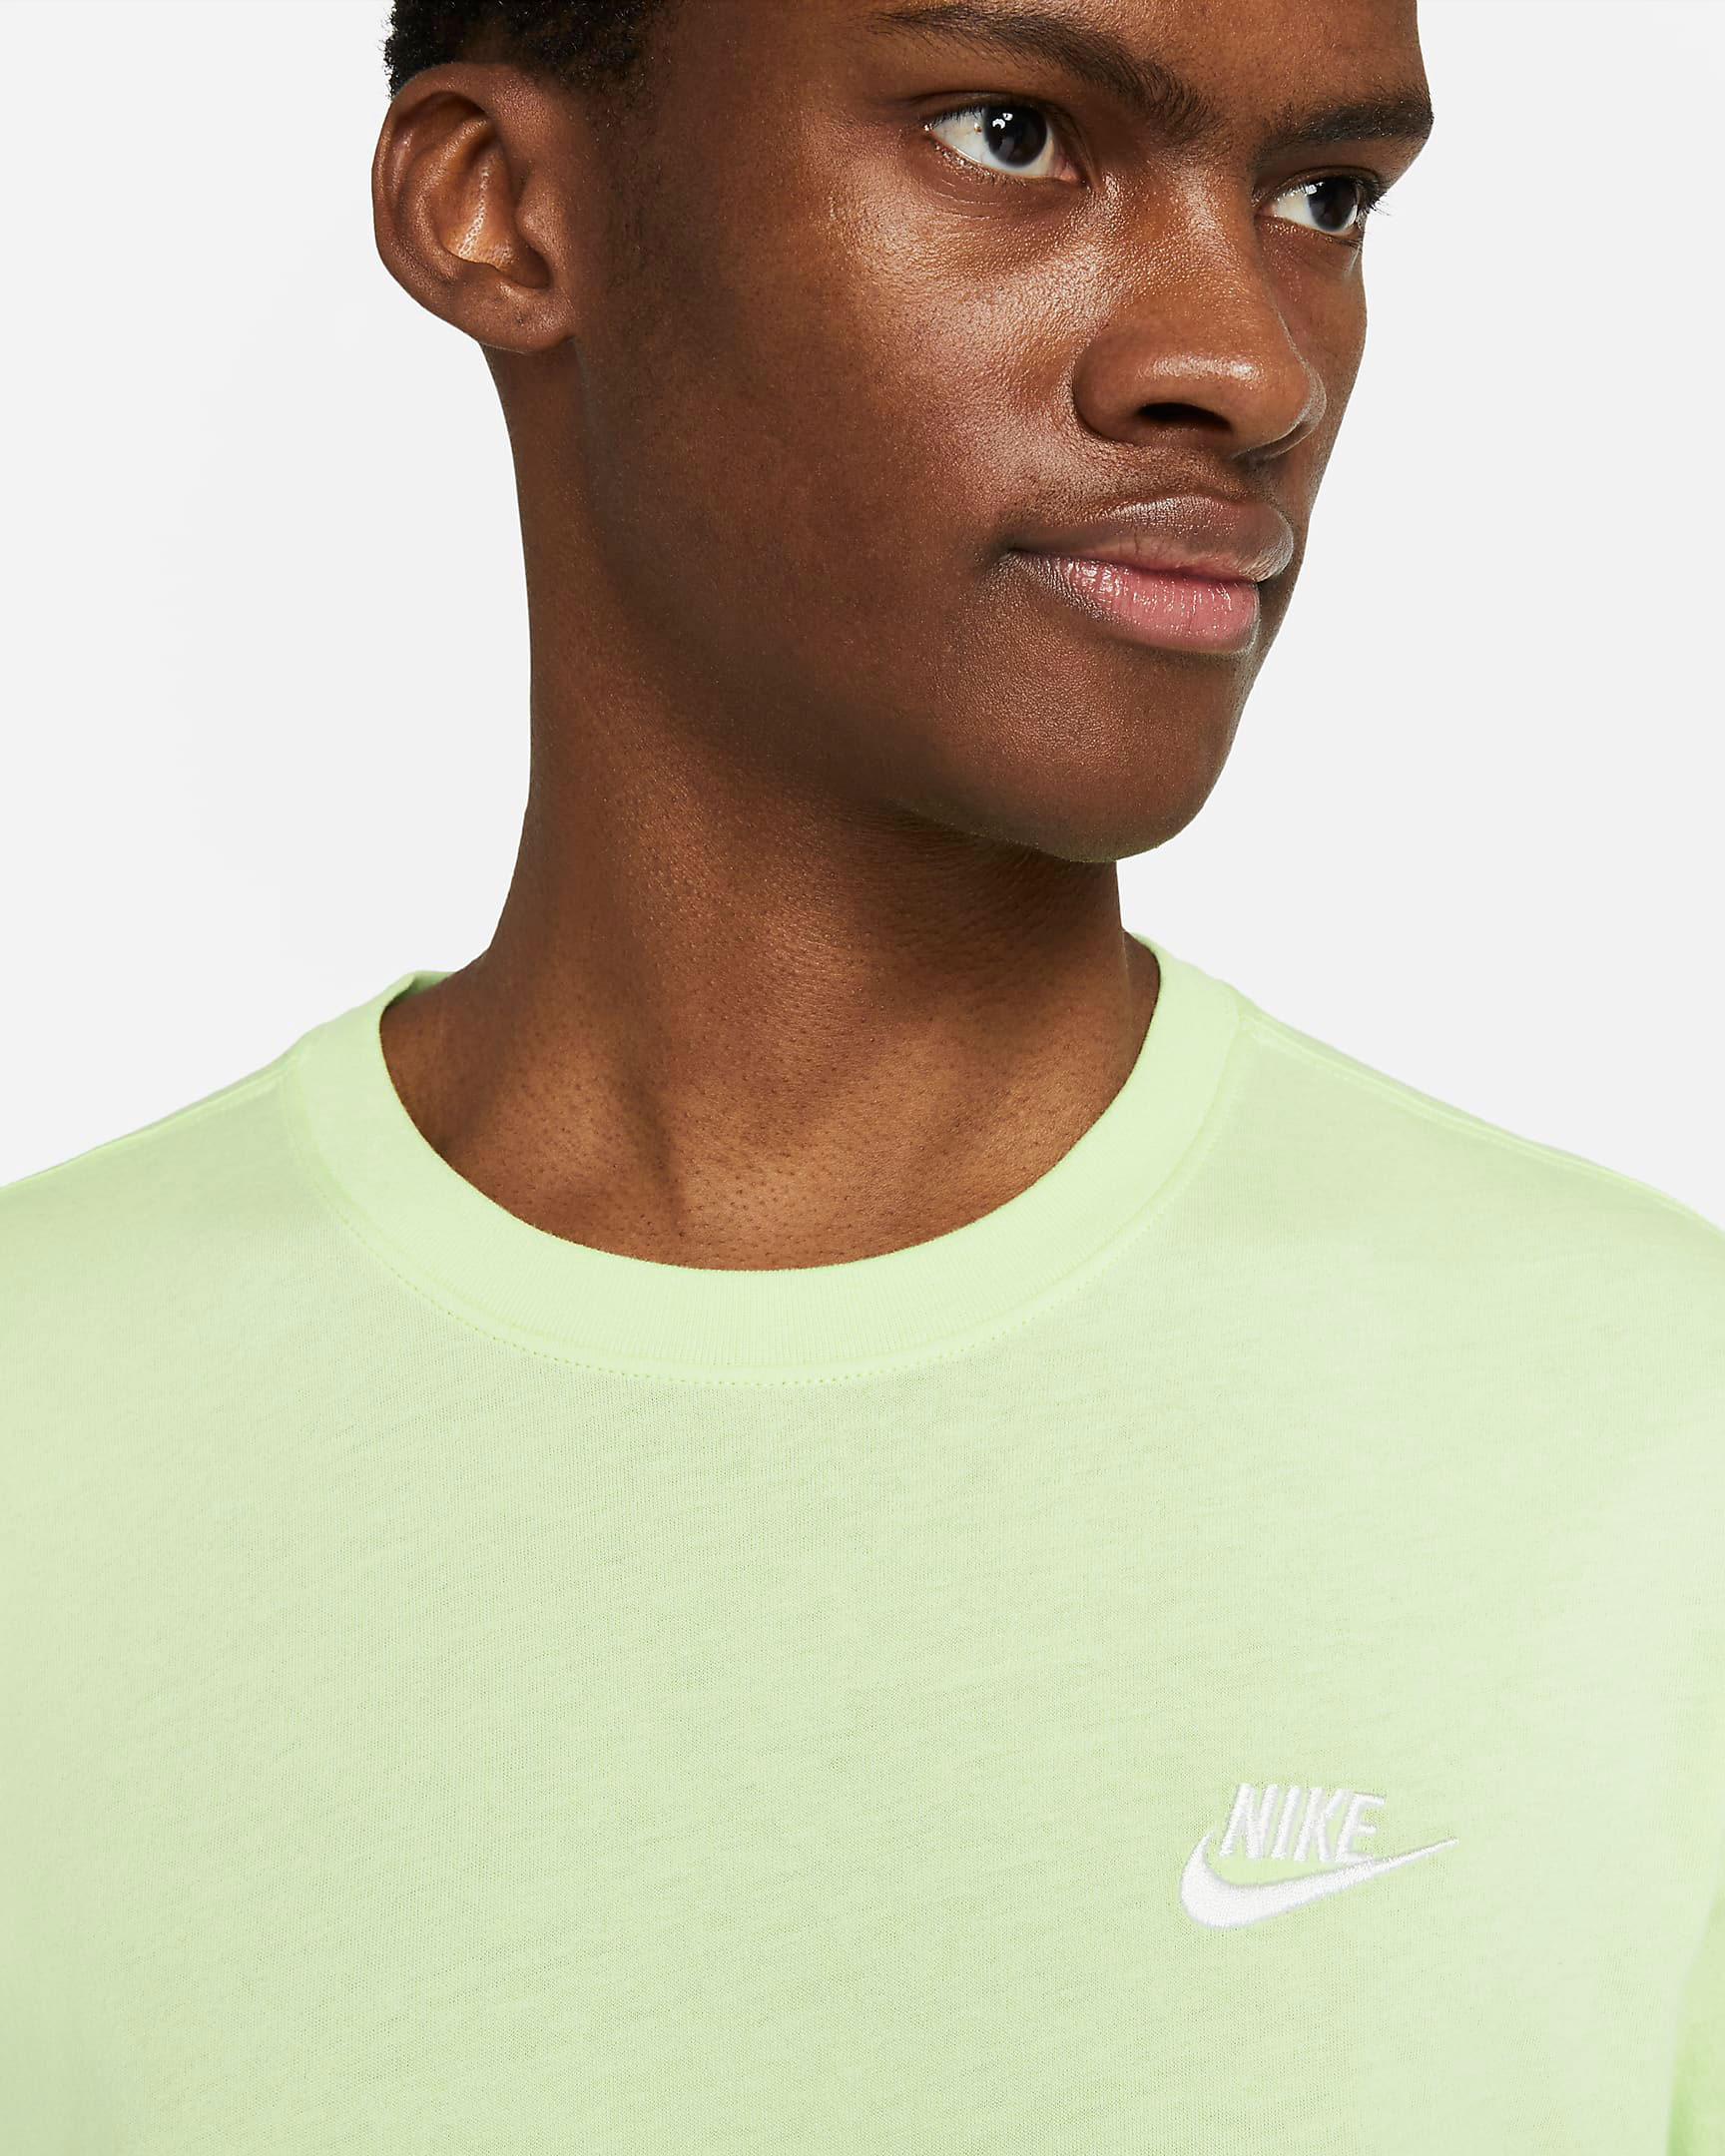 Nike LeBron 18 Dunkman Shirts Clothing Outfits to Match